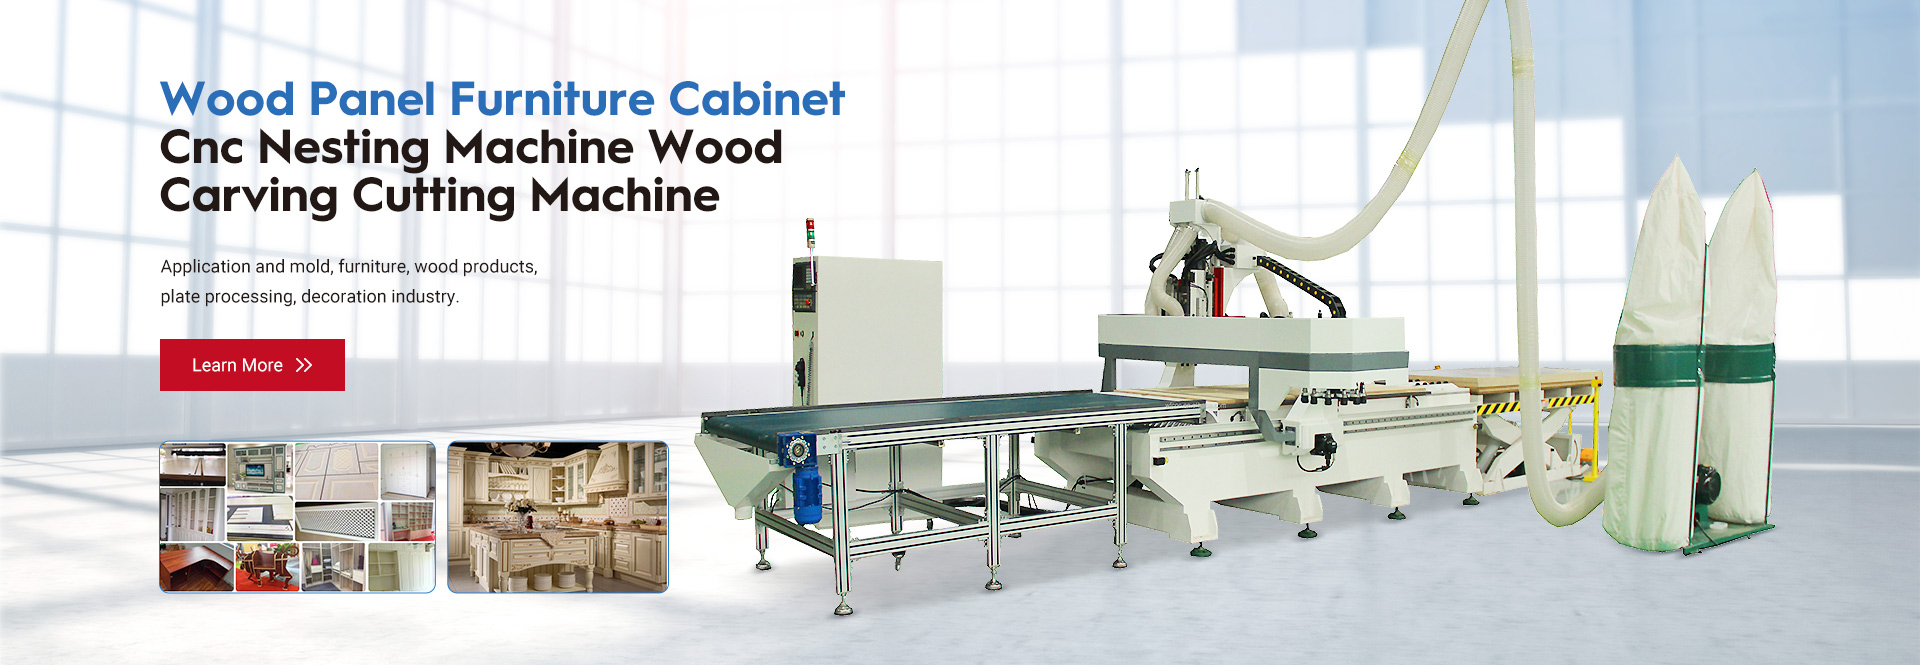 Wood Panel Furniture Cabinet Cnc Nesting Machine Wood Carving Cutting Machine 